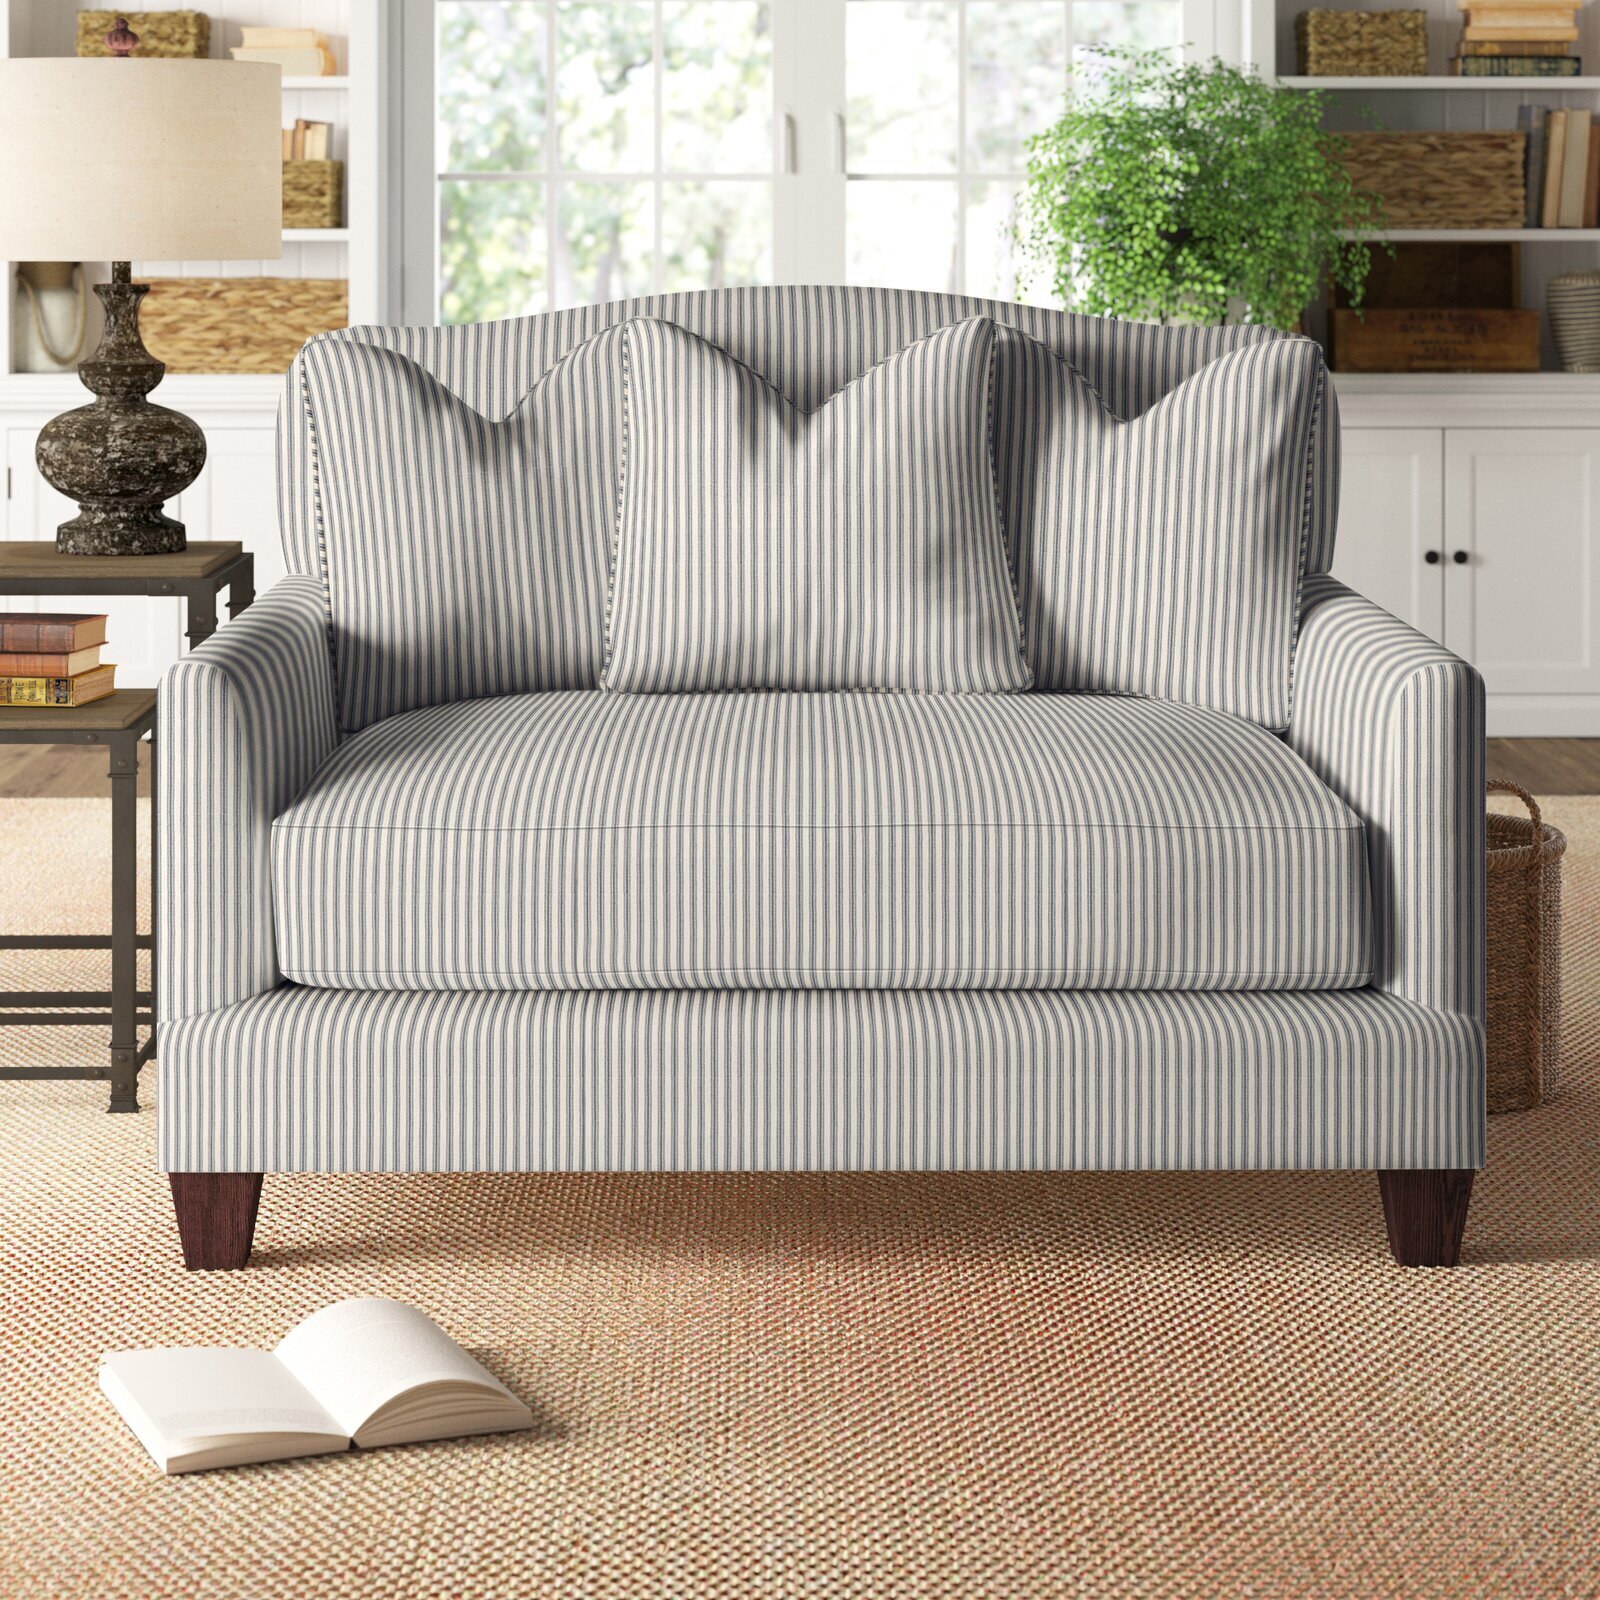 Patterned cuddle sofa